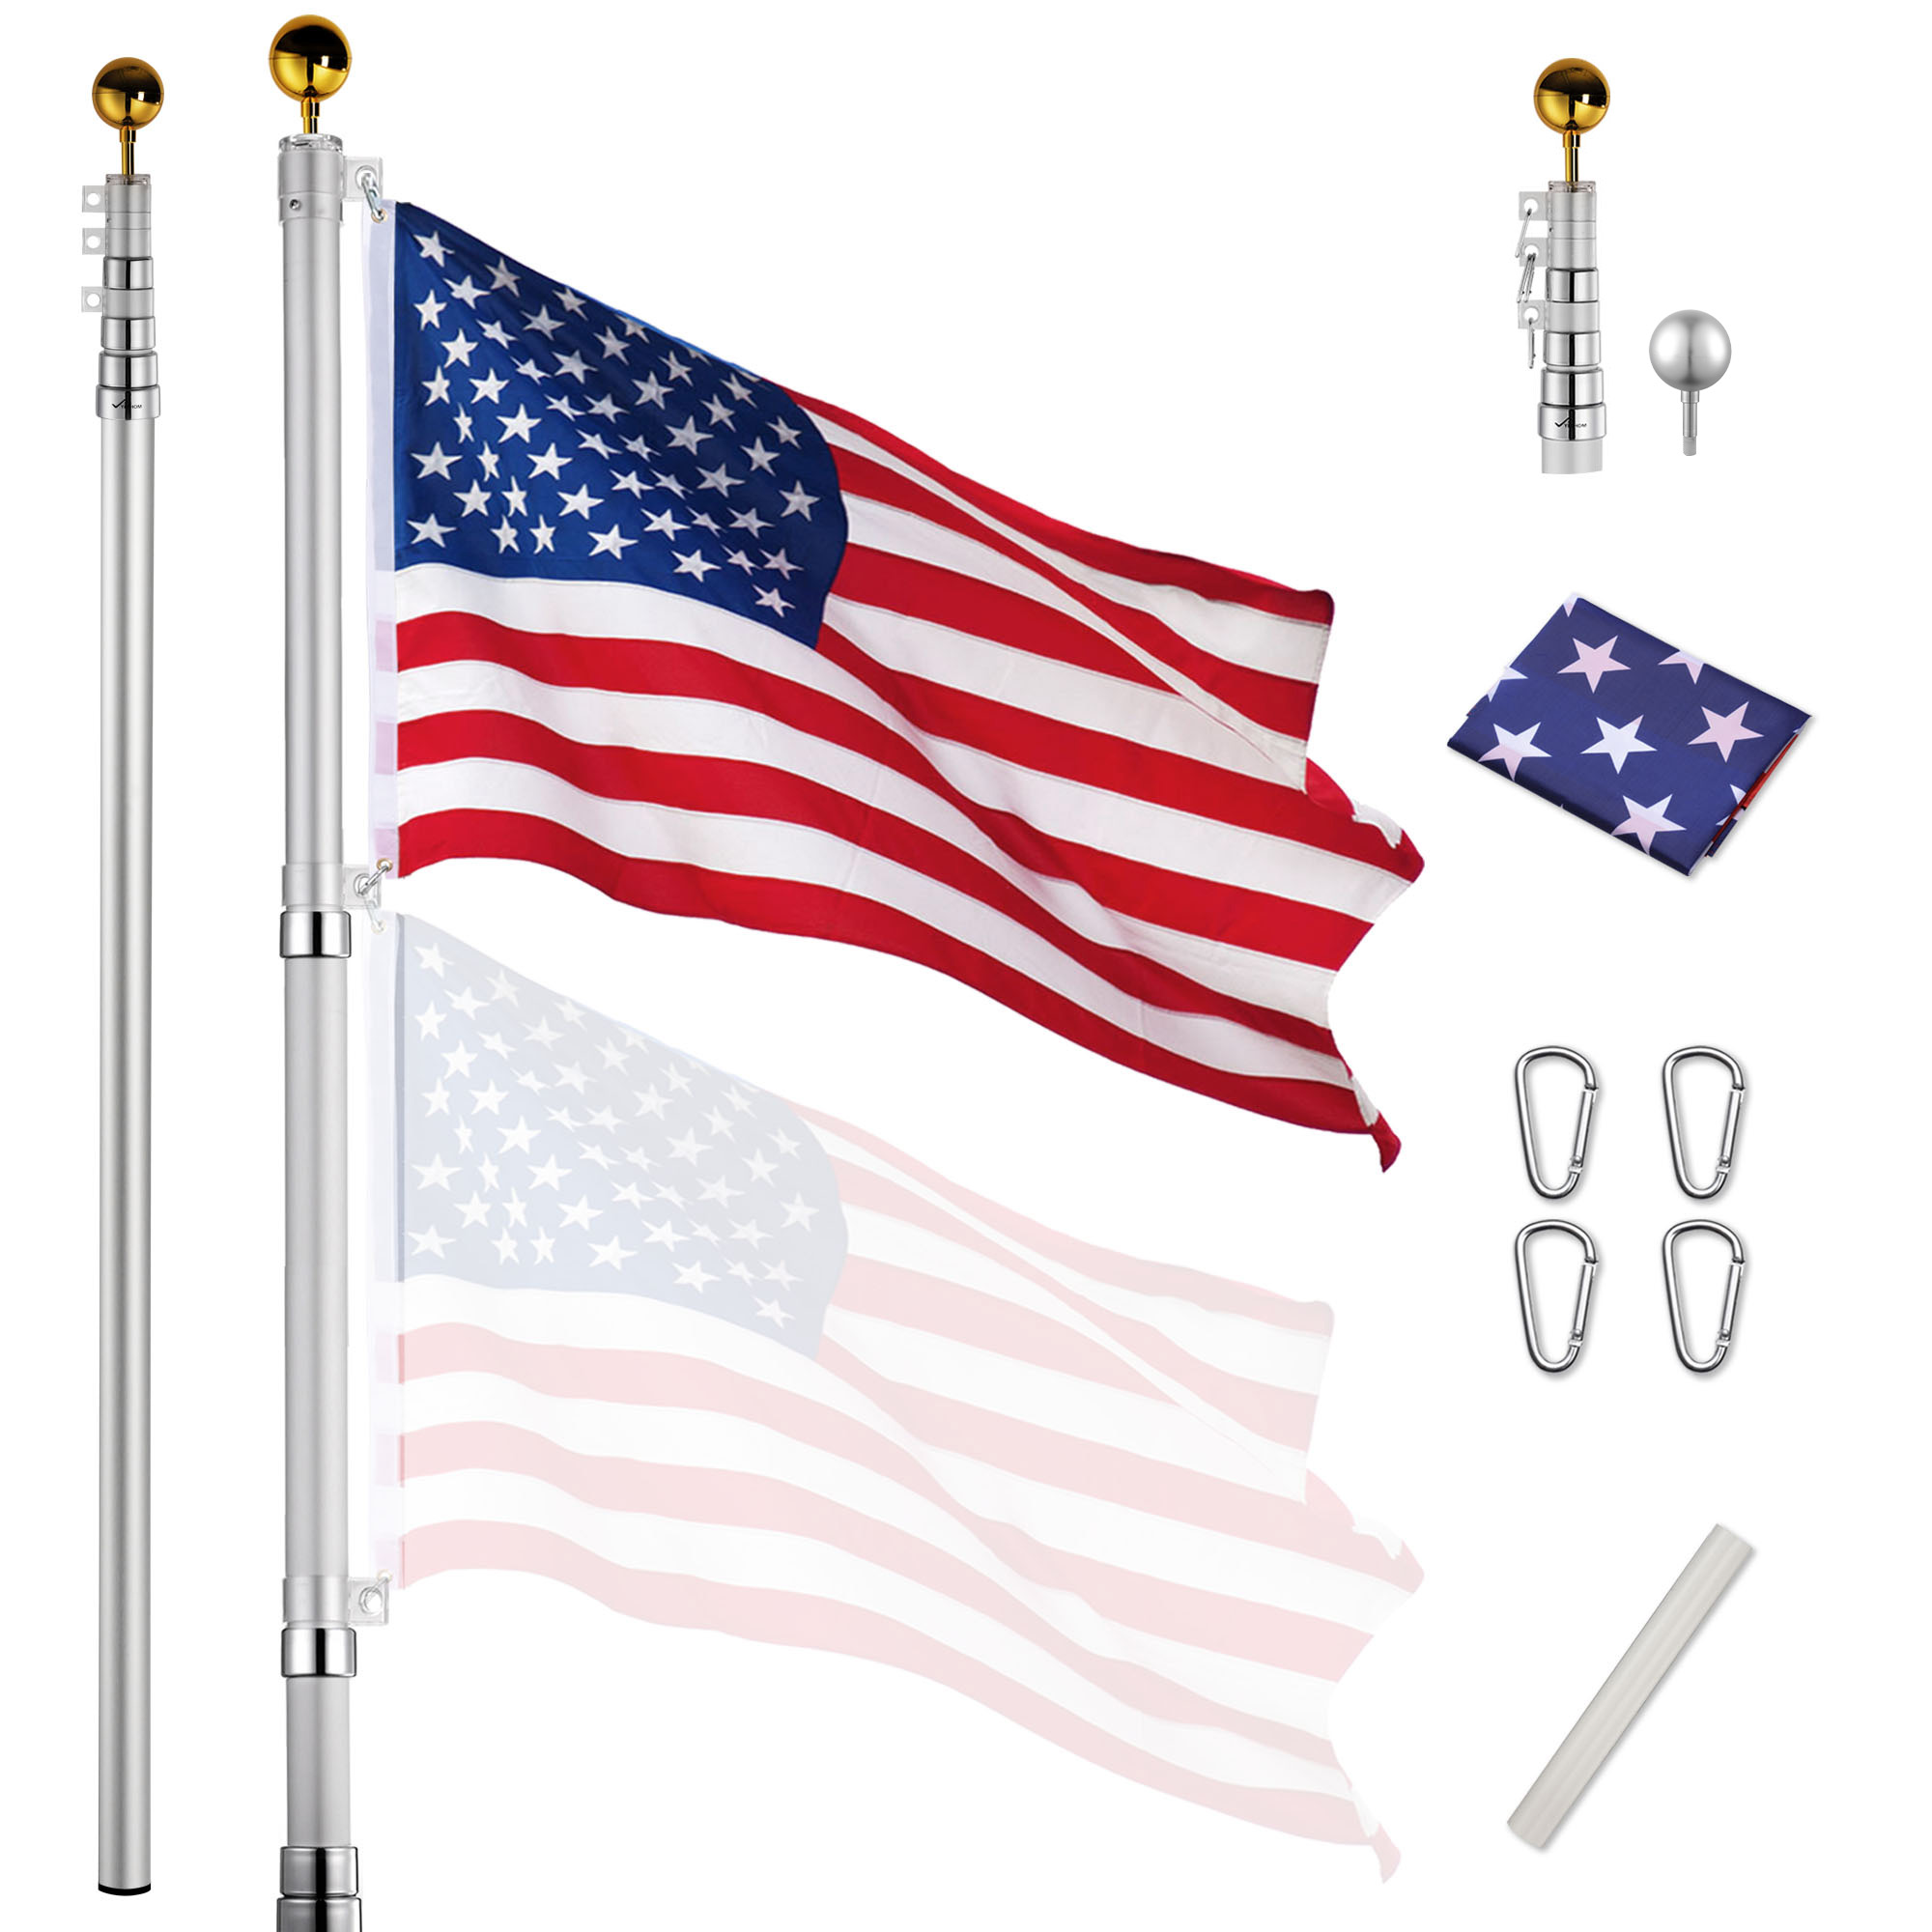 Yescom 20ft Telescopic 16 Gauge Aluminum Flag Pole+3'x5' US Flag & Ball Top Kit 16 Gauge Flagpole Fly 2 Flags